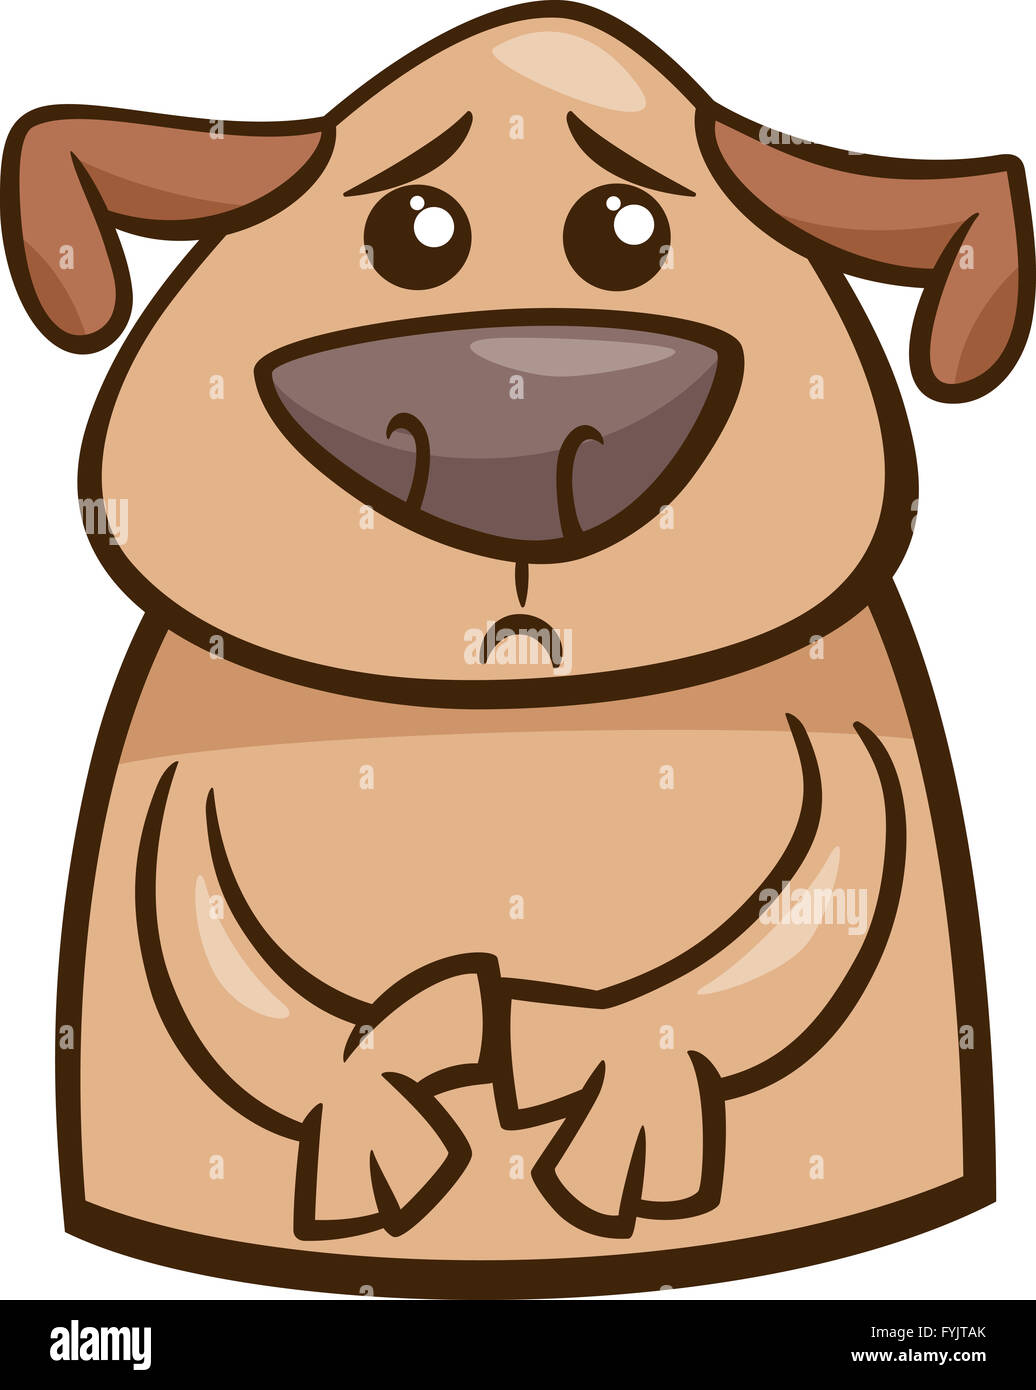 mood sad dog cartoon illustration Stock Photo - Alamy